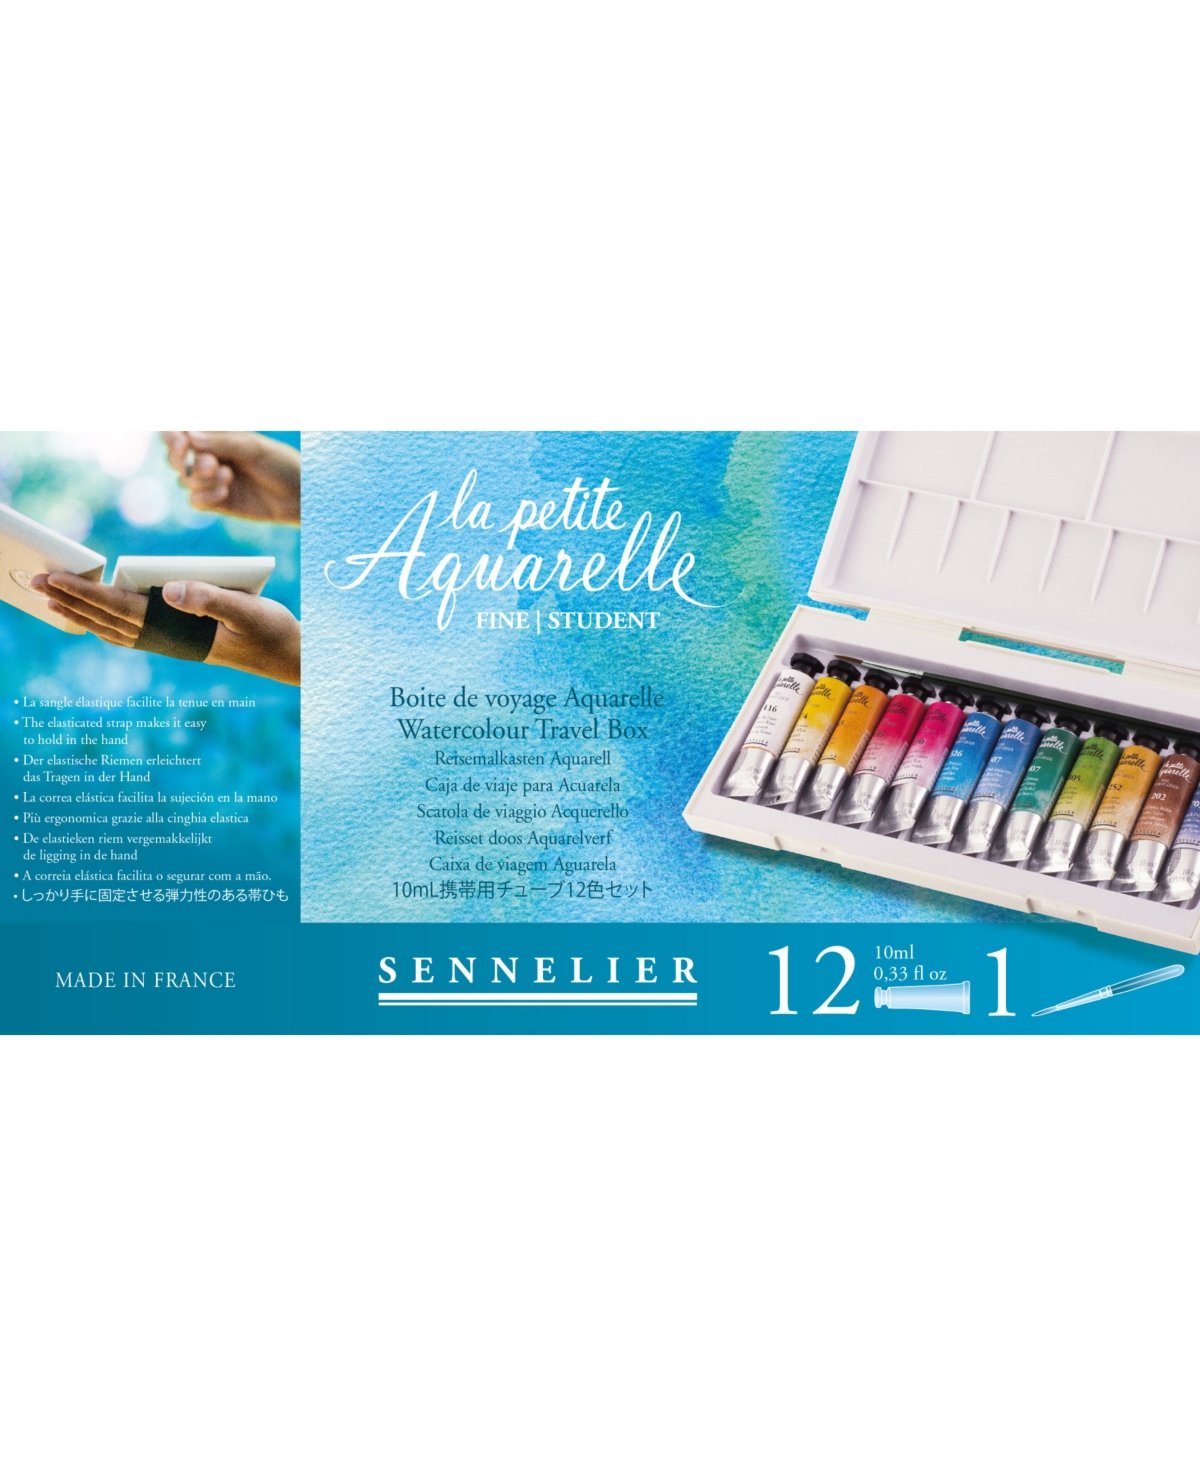 Sennelier French Artists' Watercolor Set - Iridescent Pastel, Metal Case,  Set of 6 colors, 10 ml tubes 